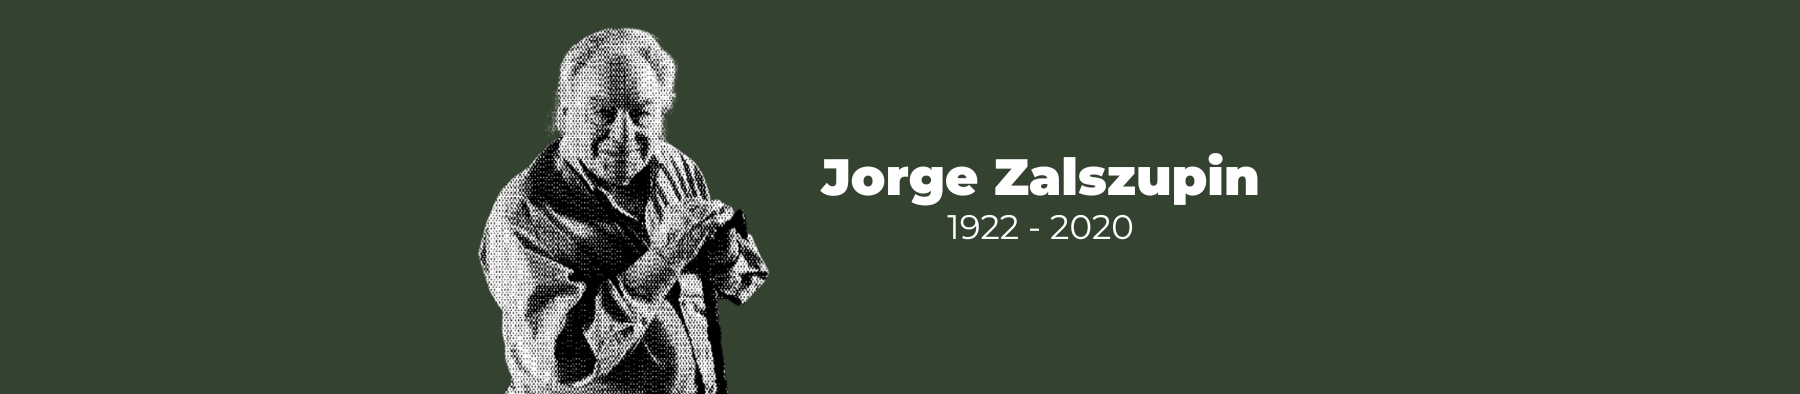 Jorge Zalszupin obras vintage